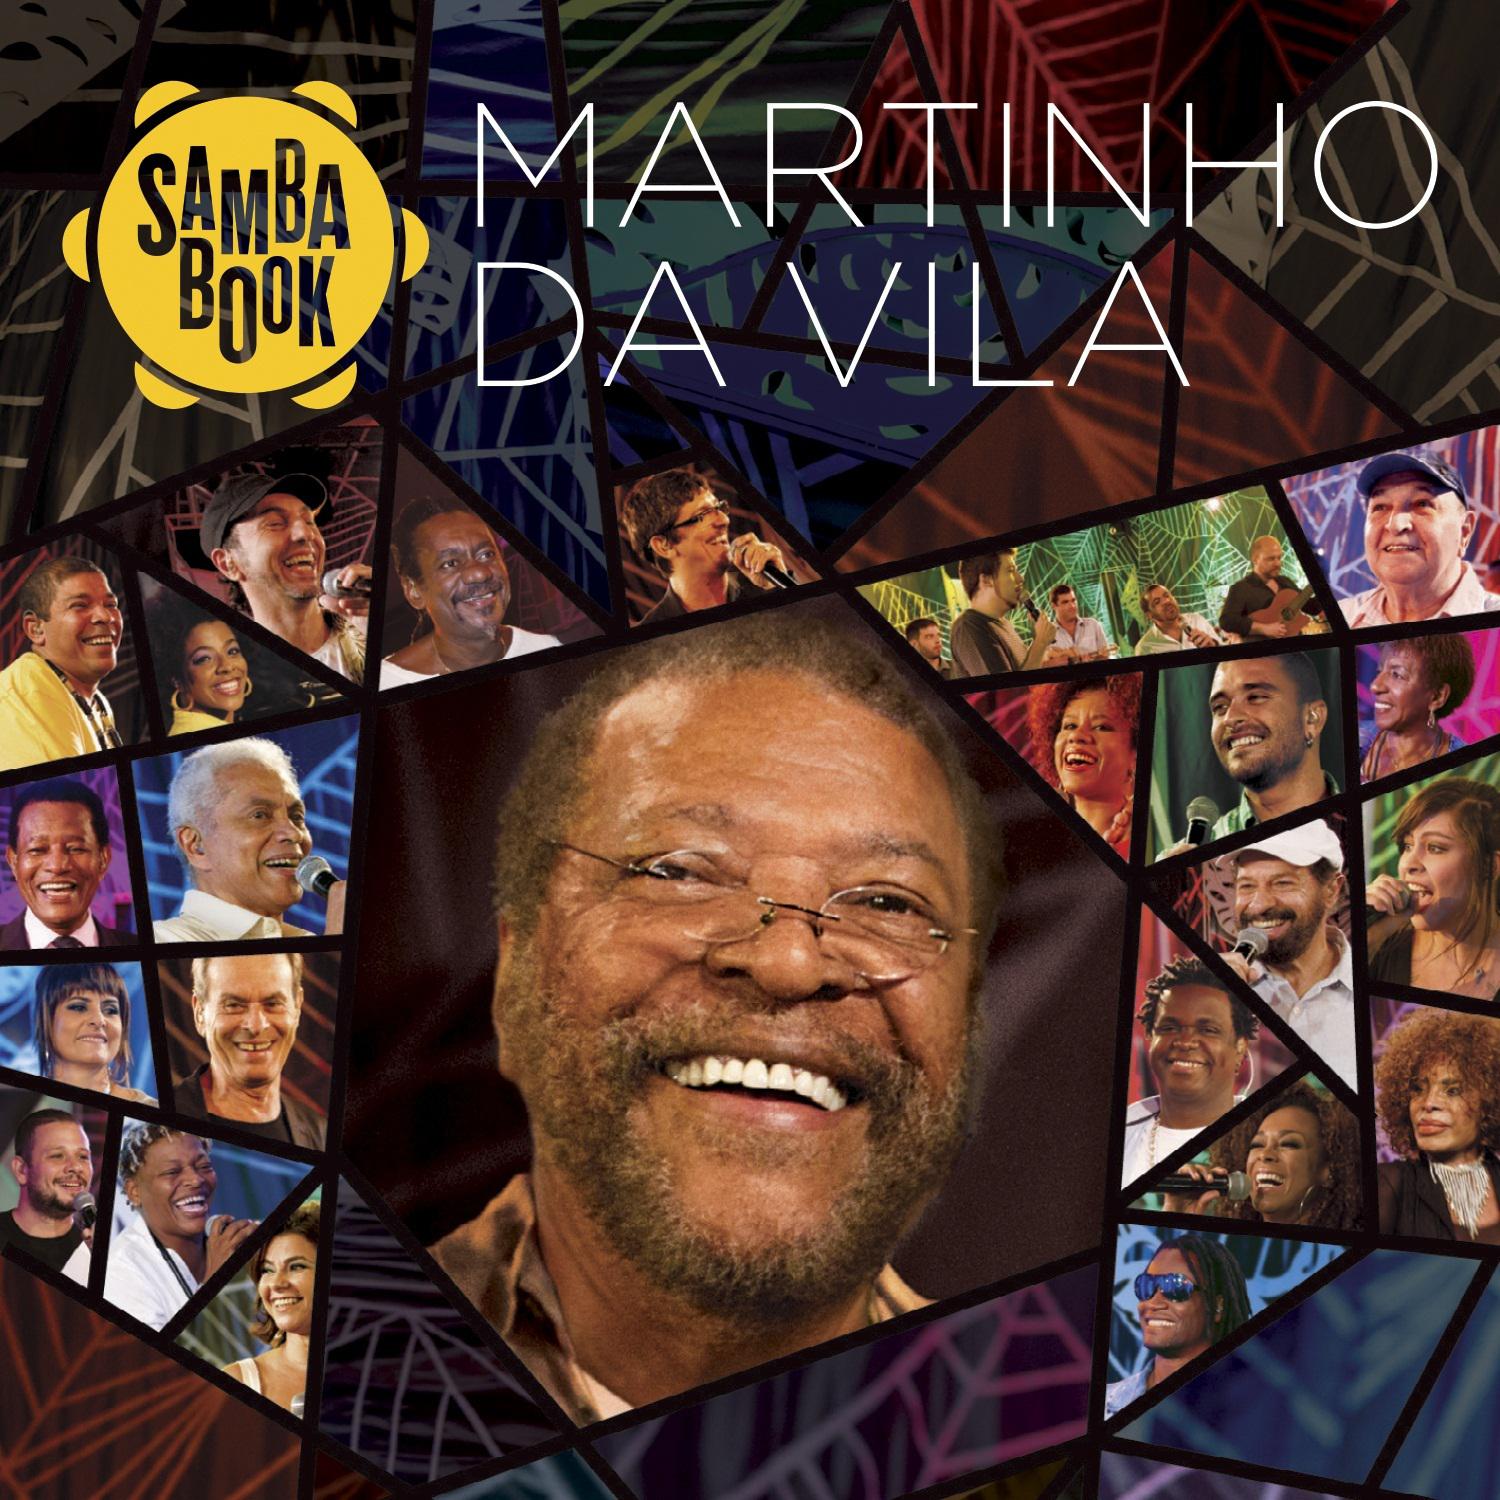 Samba Book: Martinho da Vila